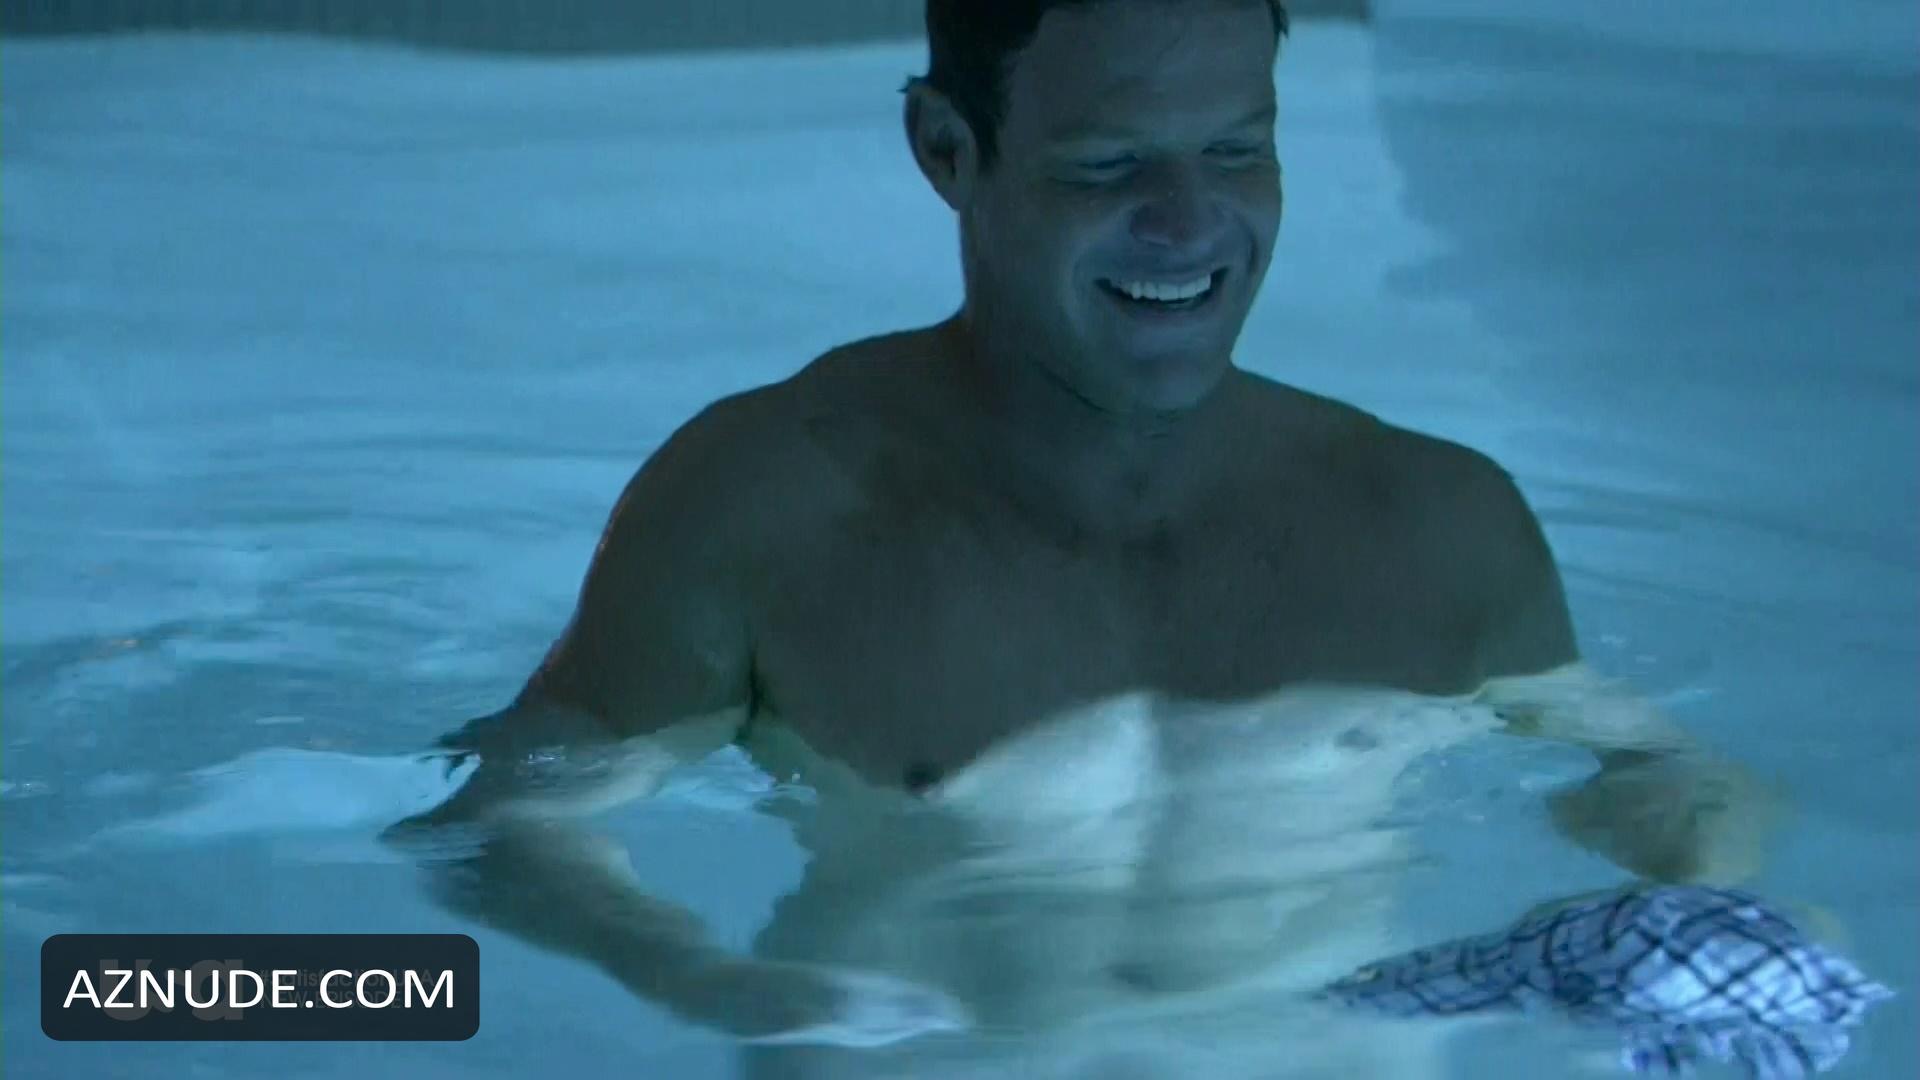 Cfnm Man dives into pool naked